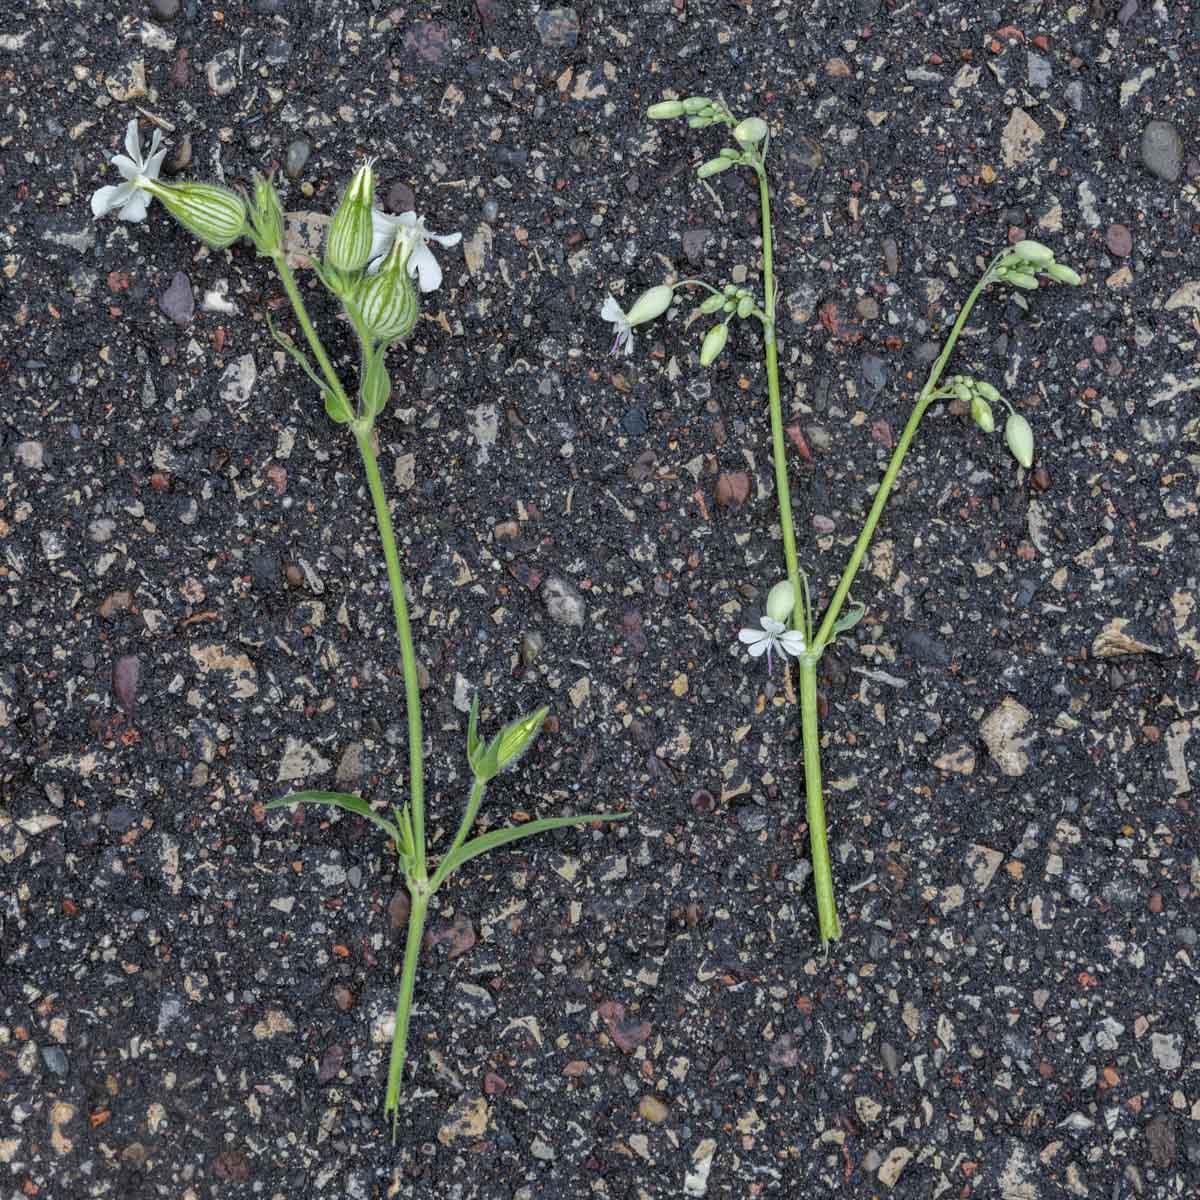 Bladder campion vs white campion on the ground. Silene vulgaris vs Silene latifolia. 